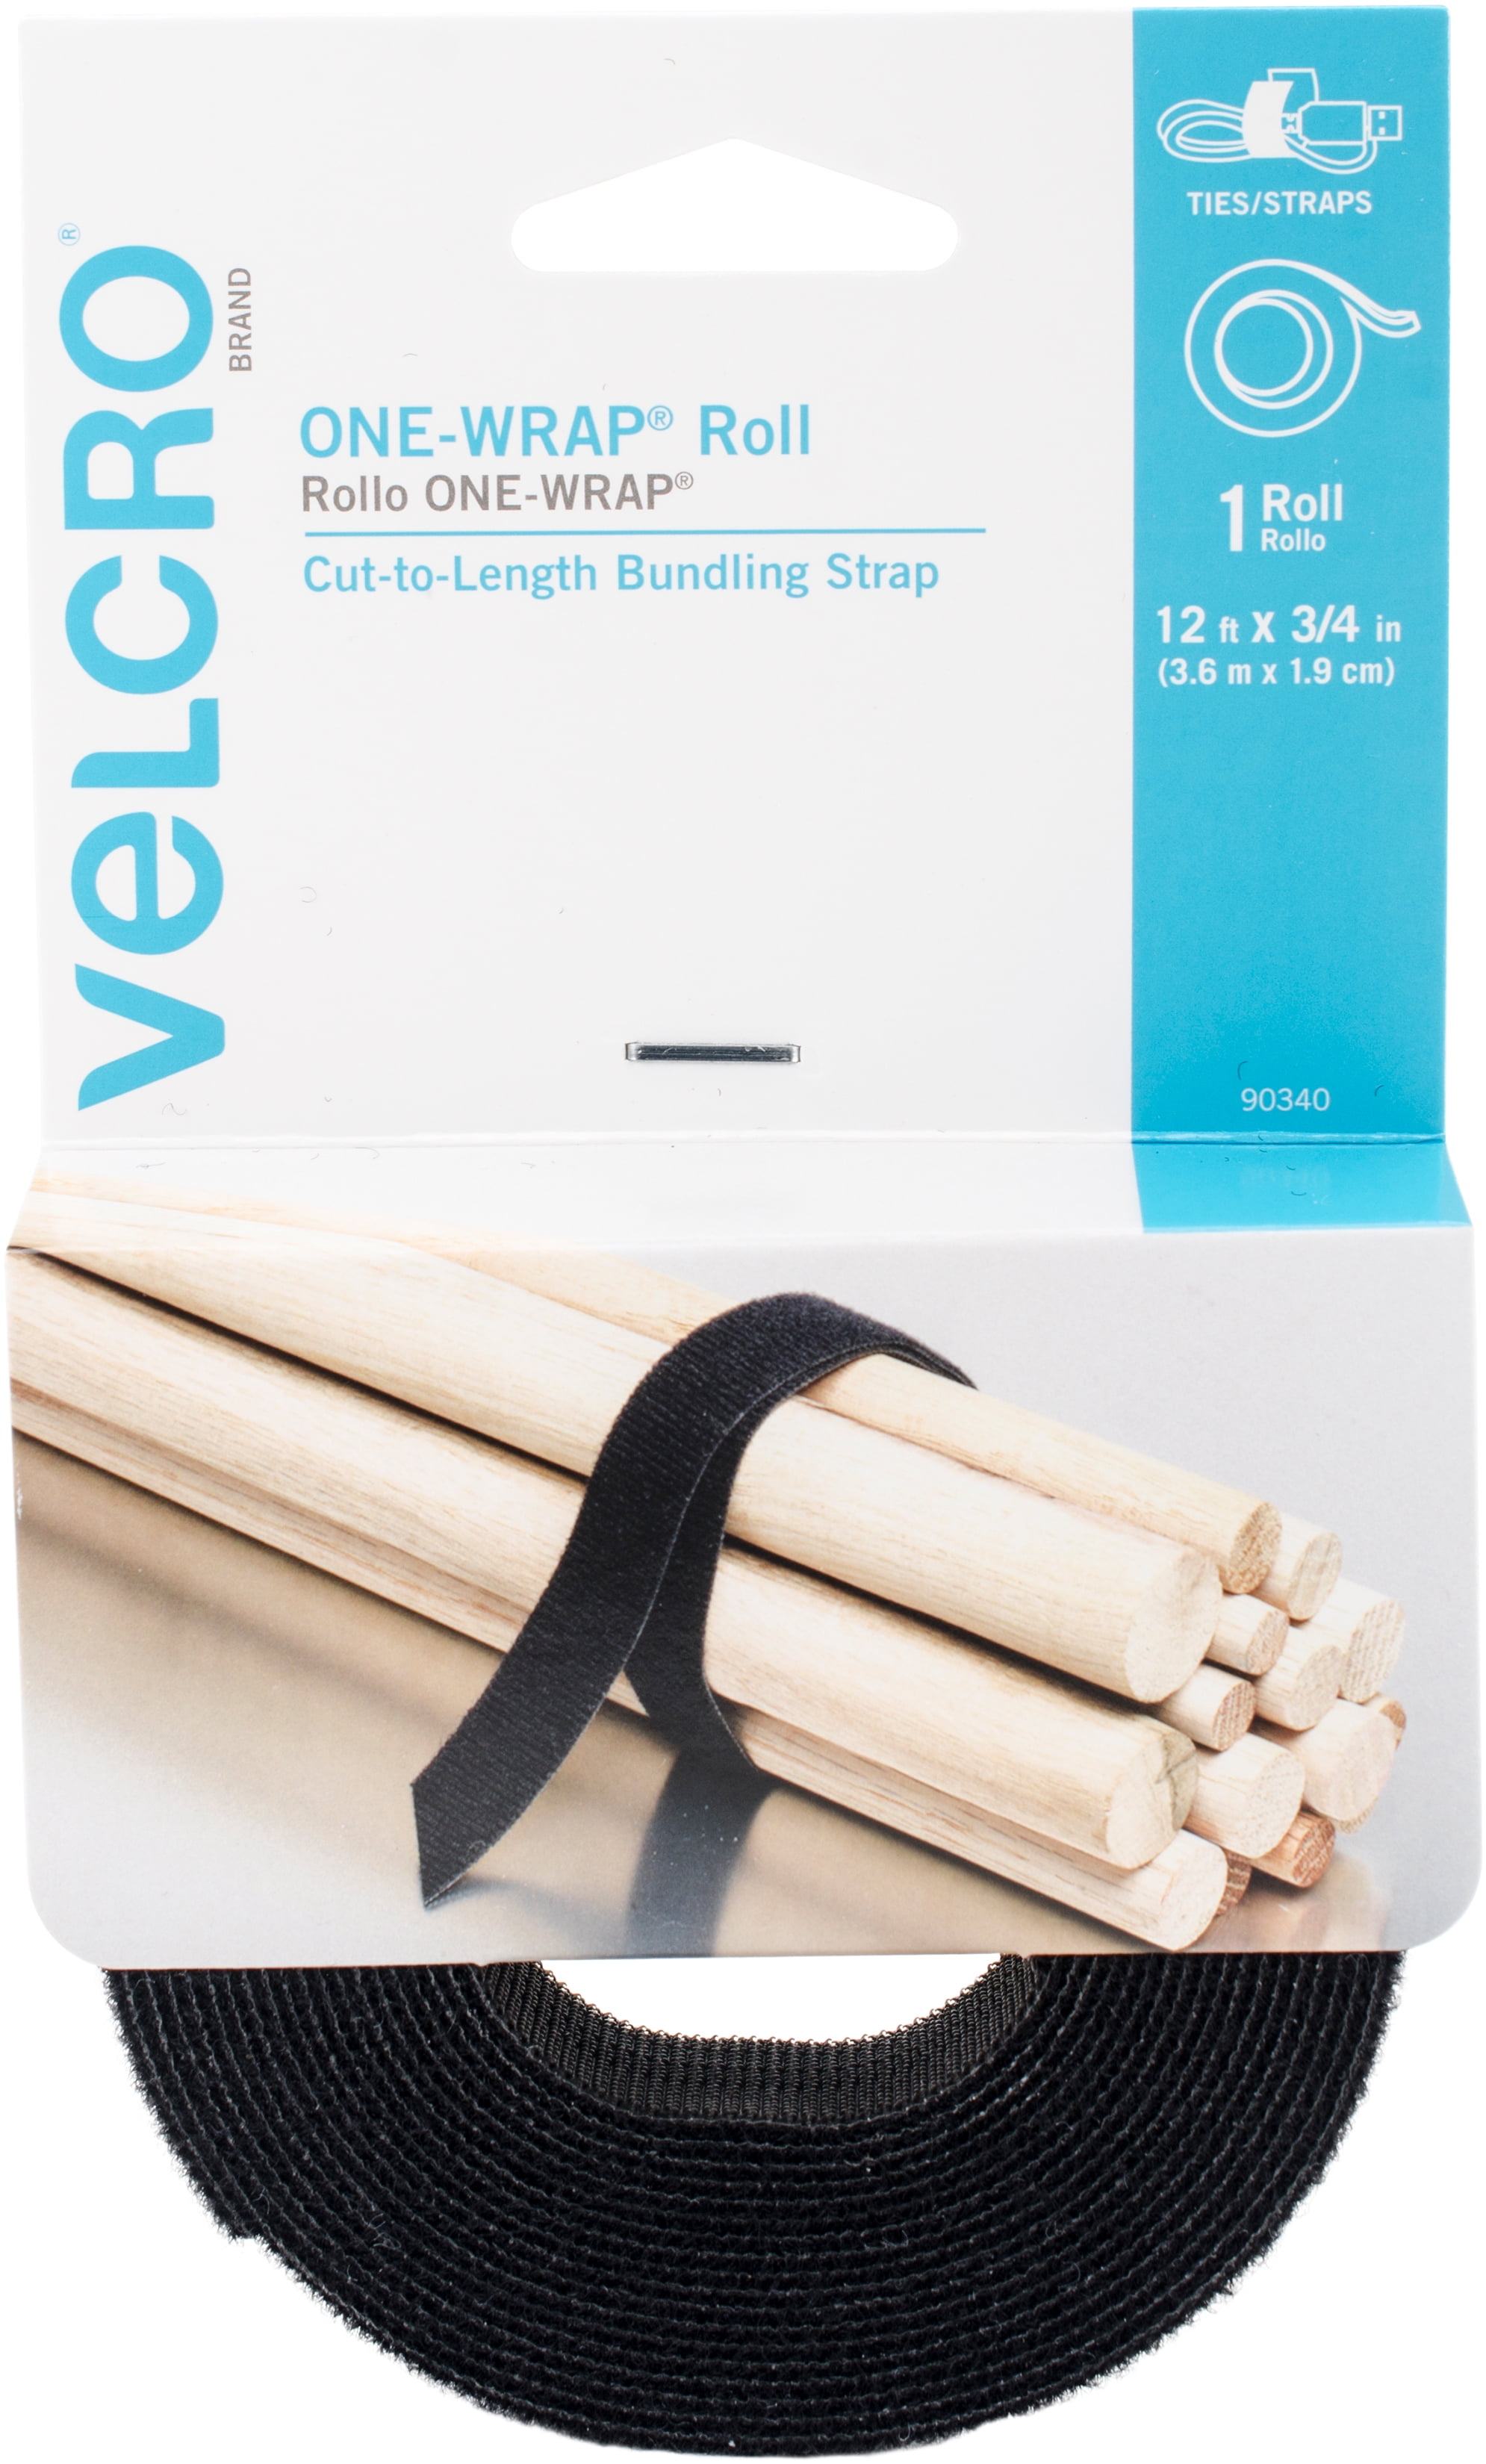 Velcro Tape Velcro Bands Velcro Velcro Cable Ties Cable Tie Garden Accessory 